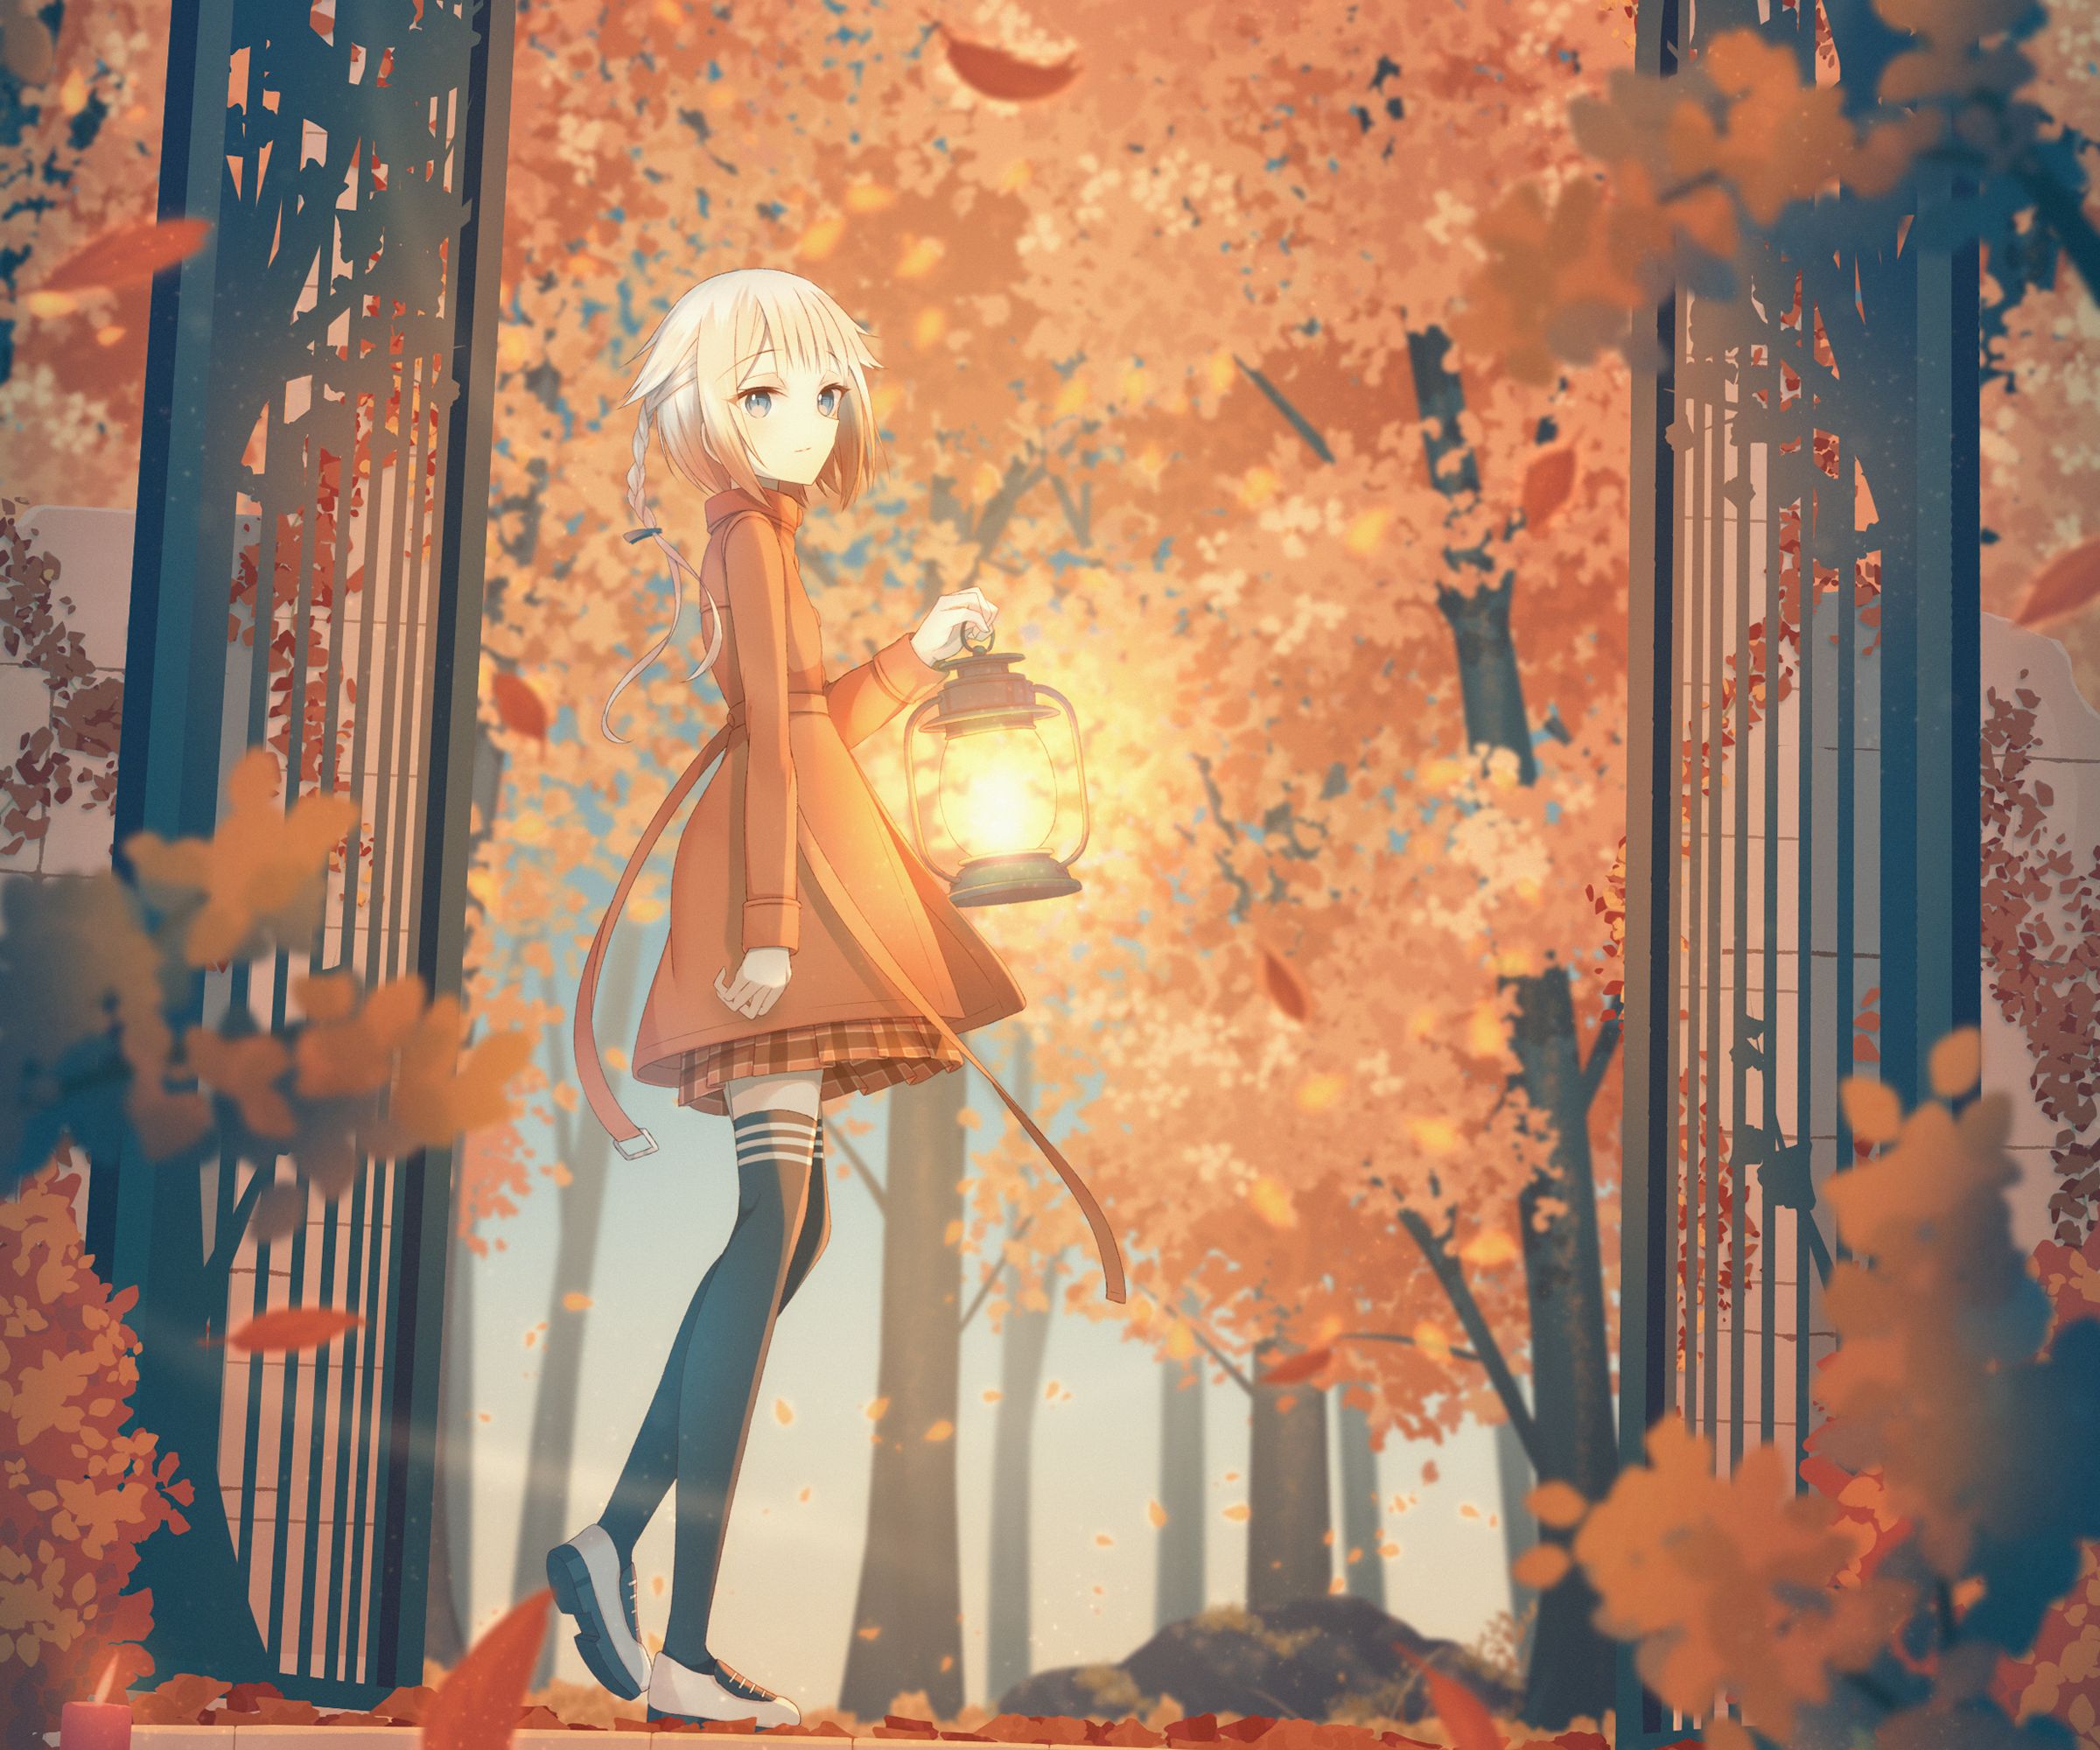 Lantern Festival - Other & Anime Background Wallpapers on Desktop Nexus  (Image 2293632)